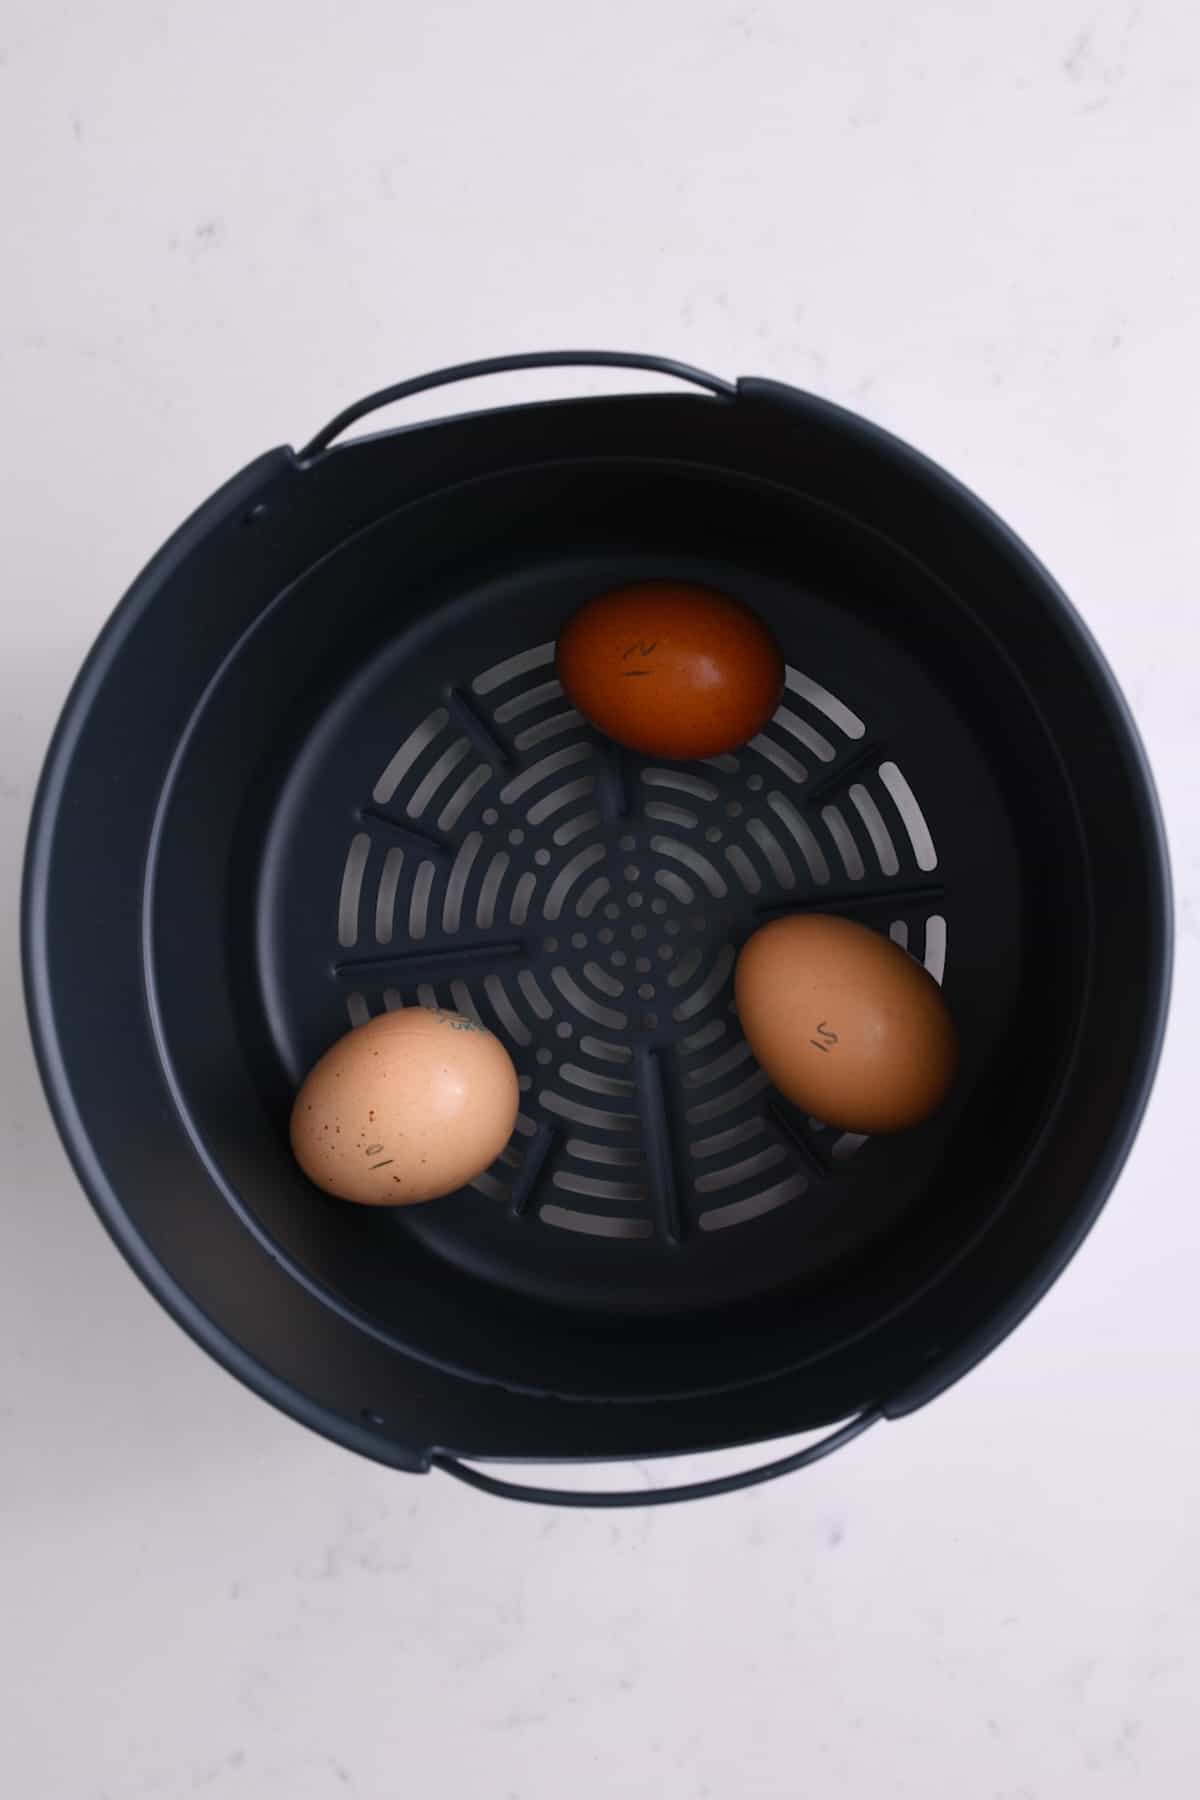 Three eggs in an air fryer basket